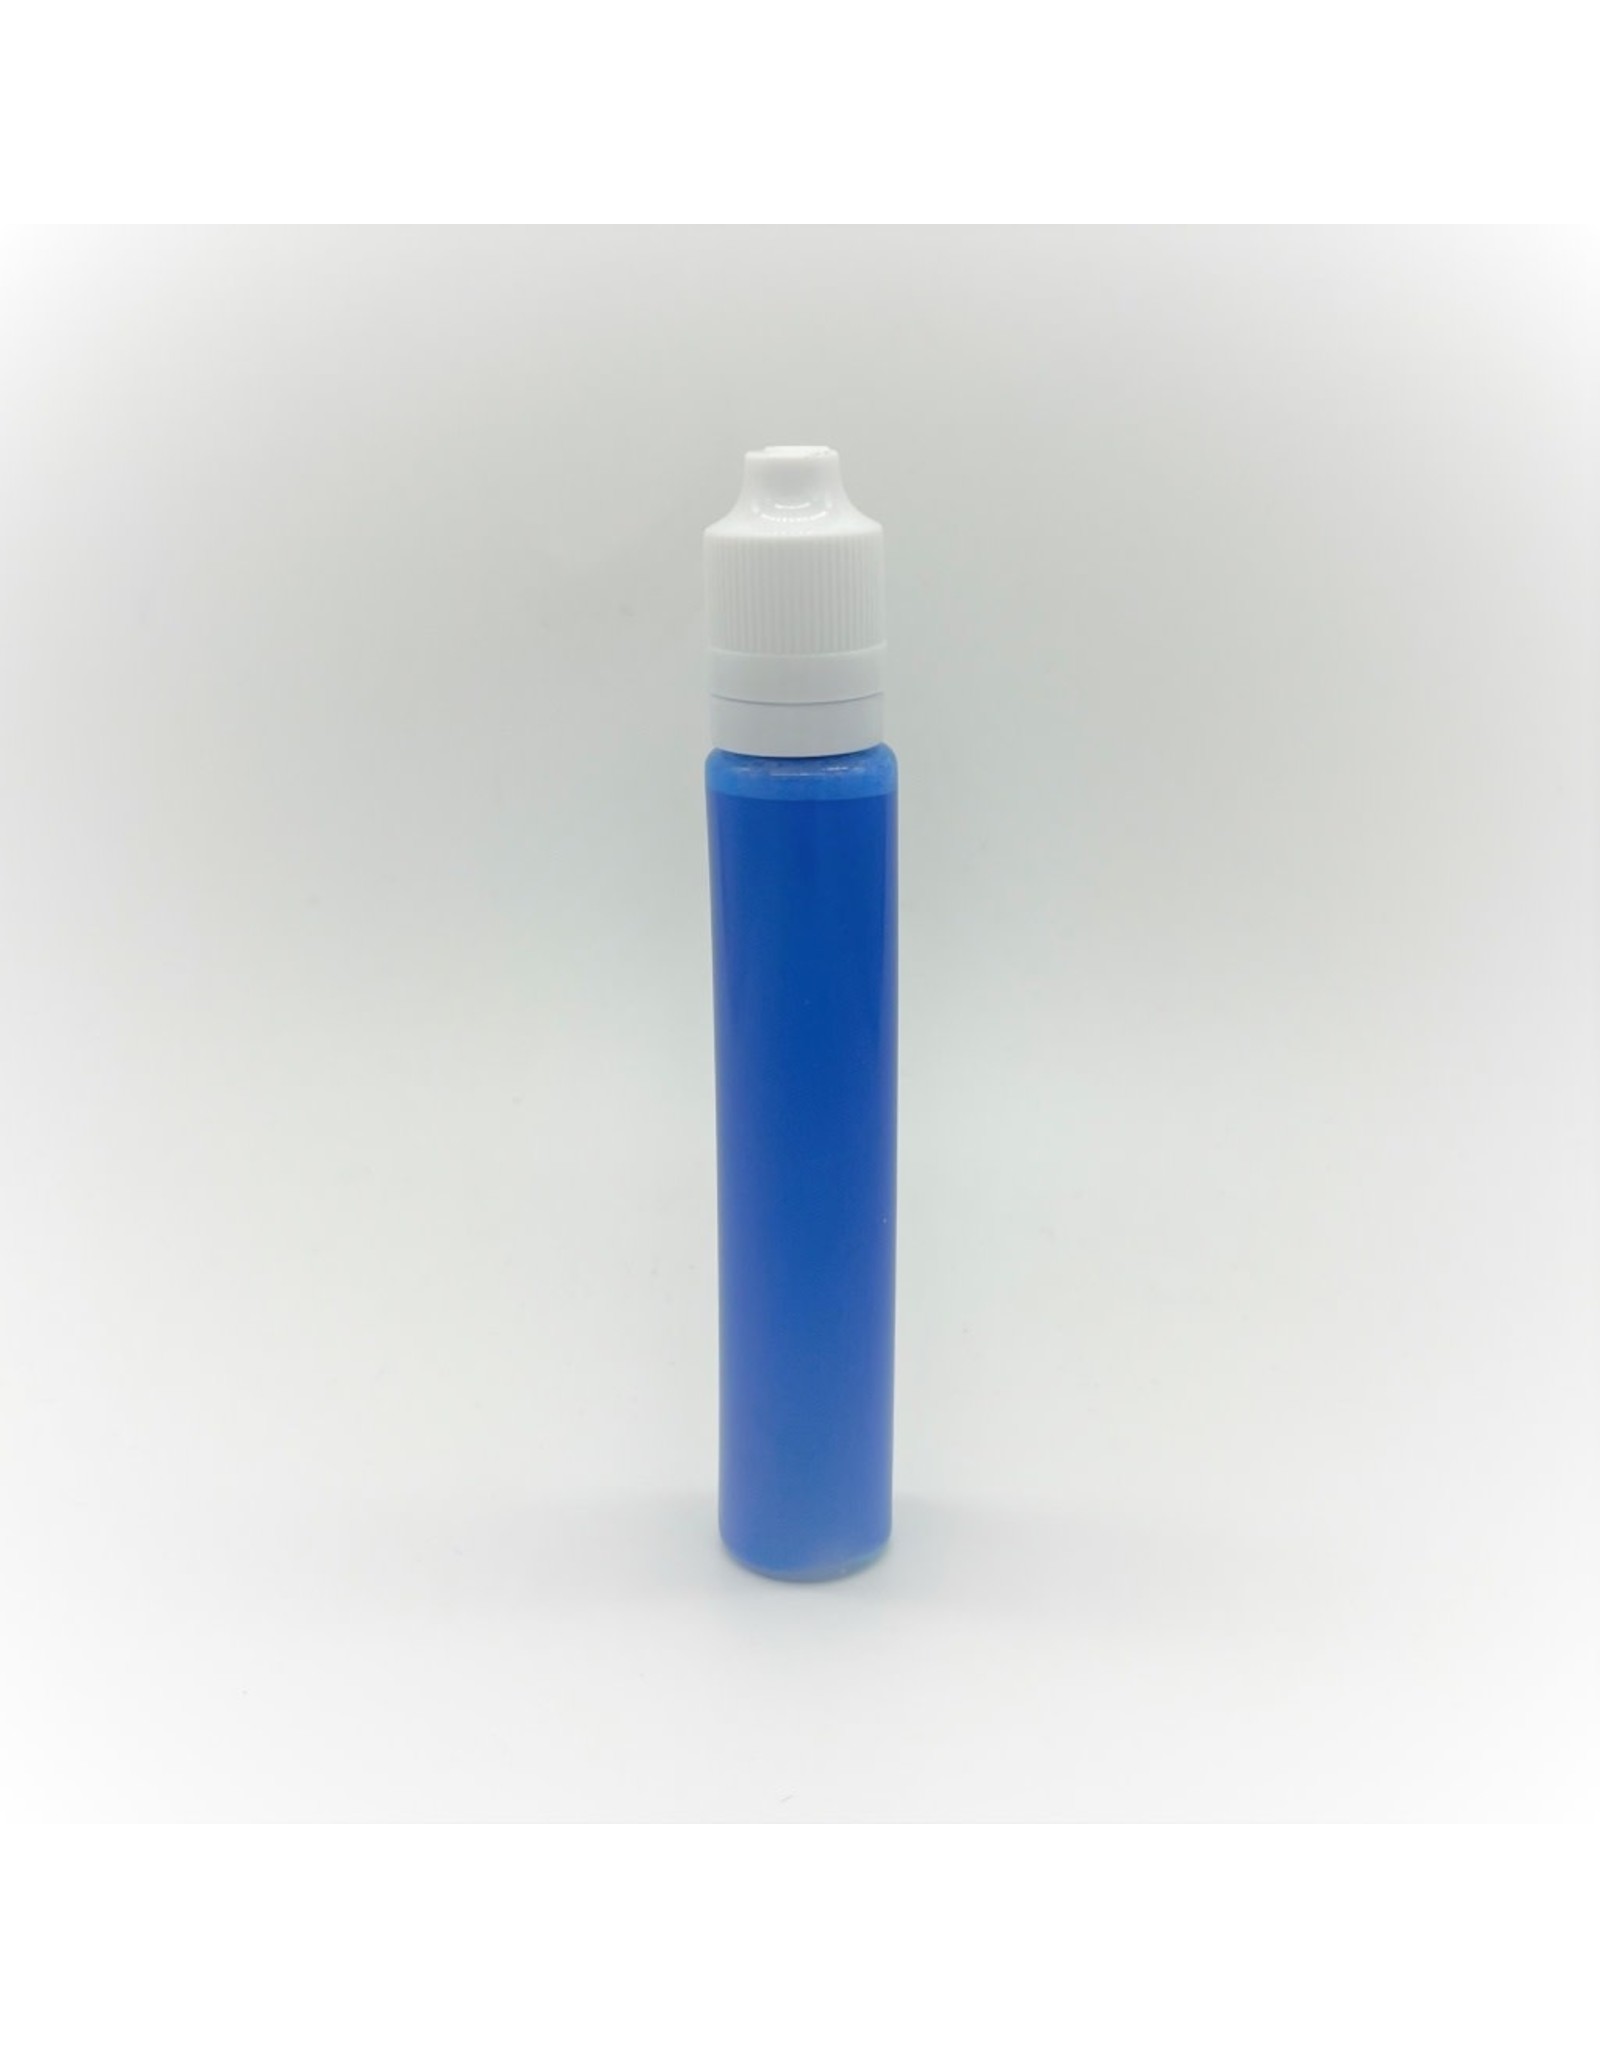 IndigoBlu Vivid Ink Spray Refill - 30ml - Blue Satin Sashes